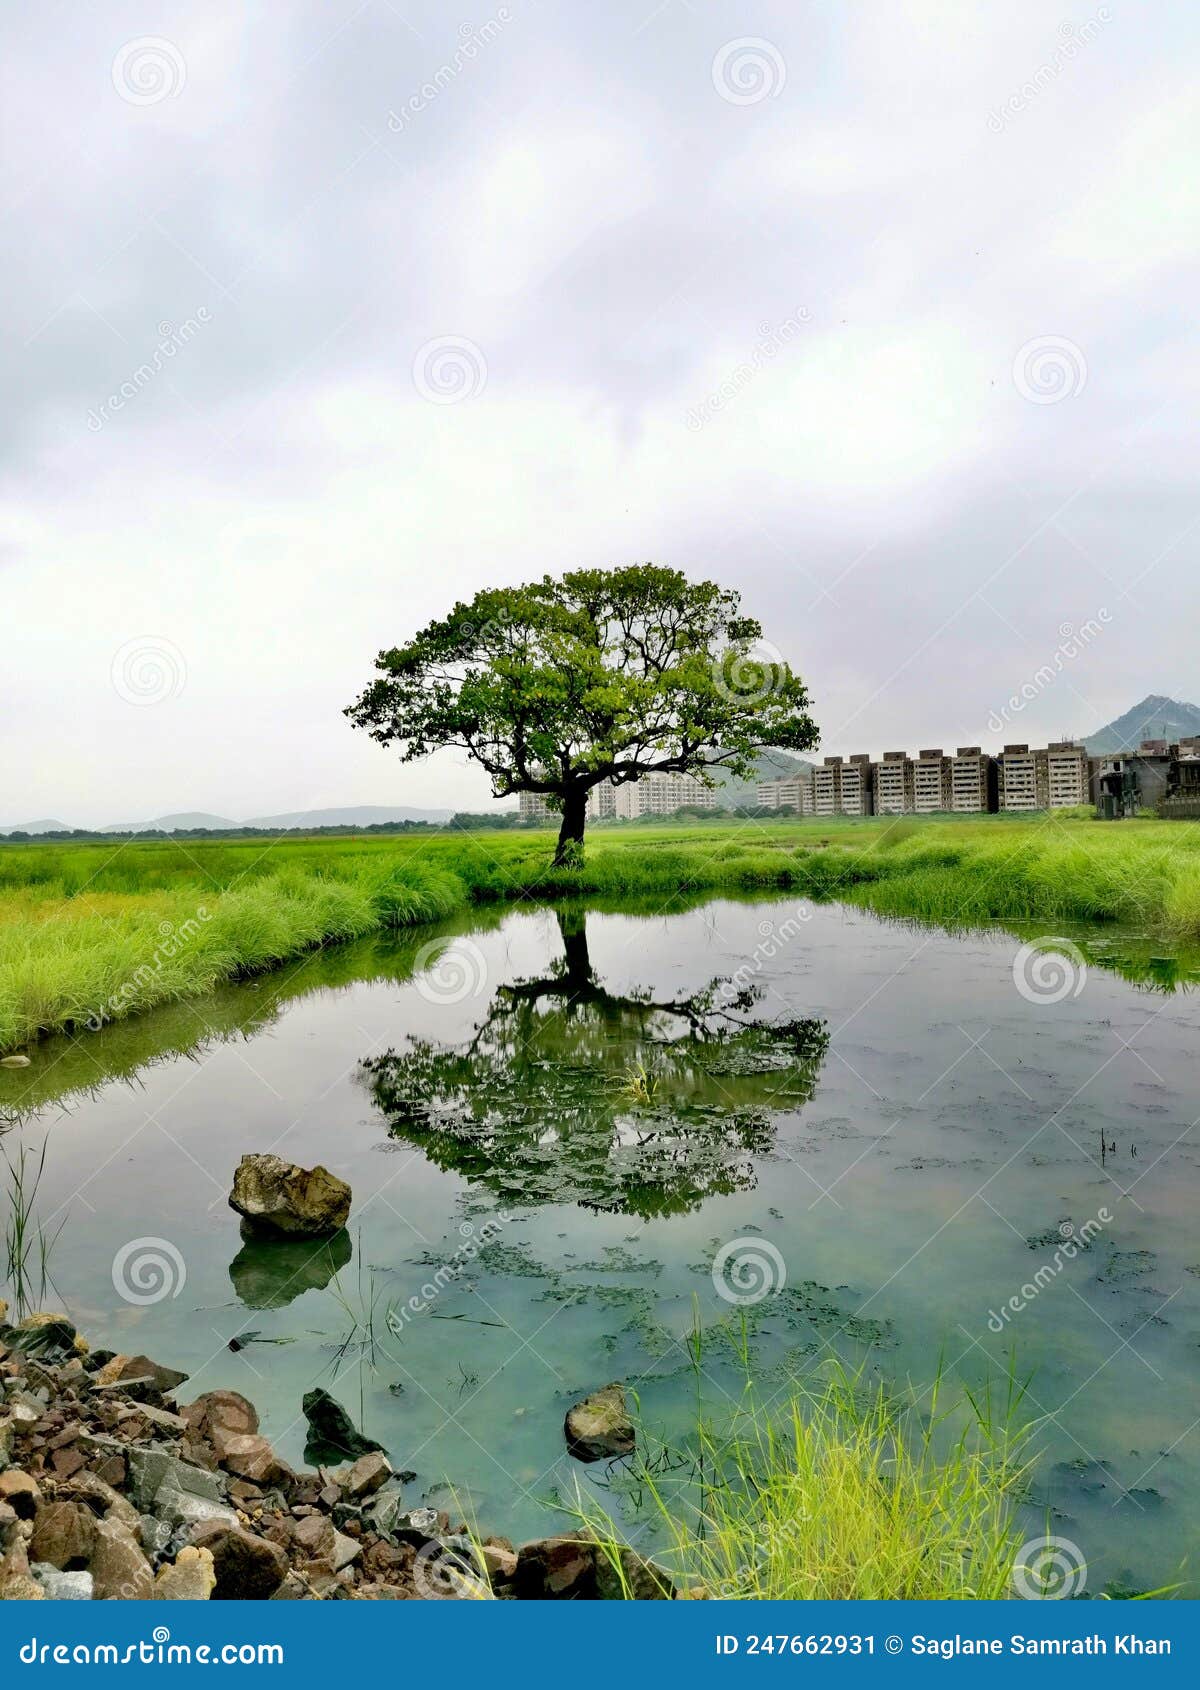 save nature & love nature 100 years old tree in india virar portrait shot in rainy season